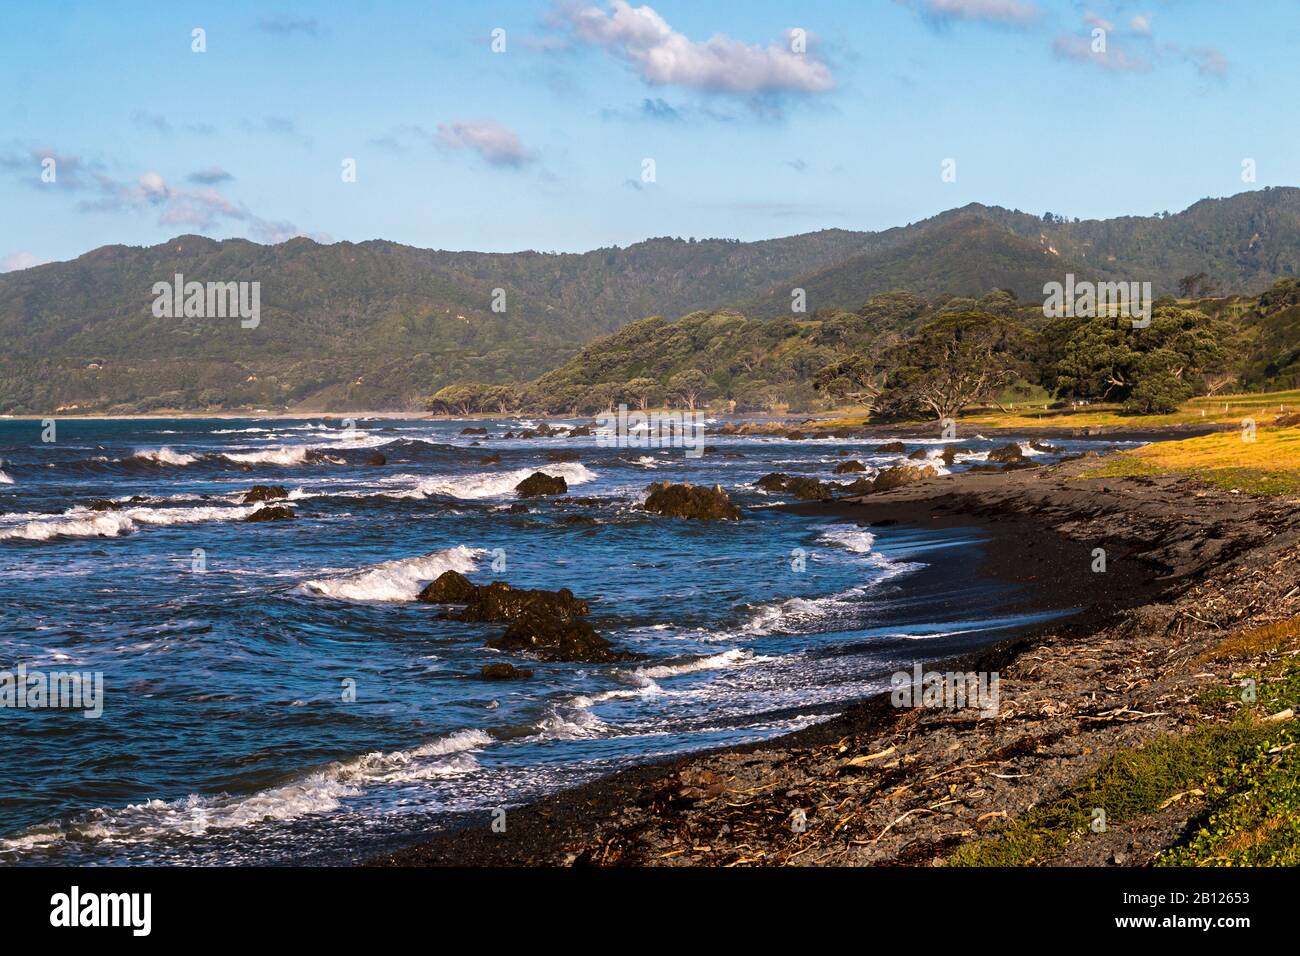 Typical coastline between Whakatane and the East Cape, North Island, New Zealand Stock Photo